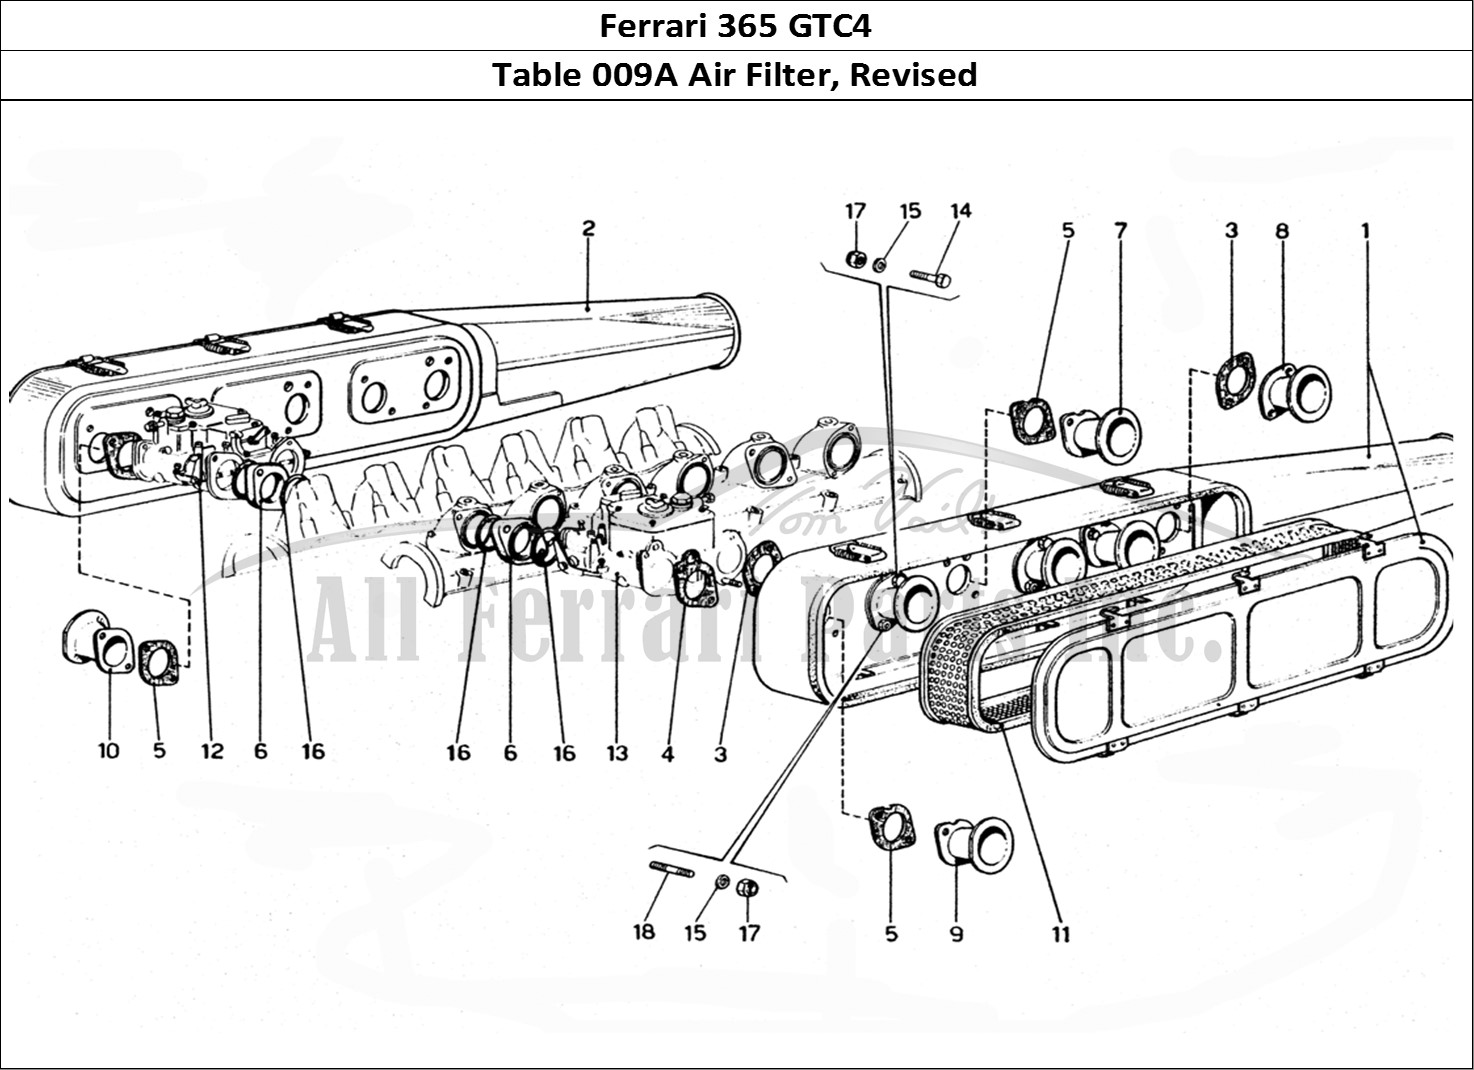 Ferrari Parts Ferrari 365 GTC4 (Mechanical) Page 009 Air filters - Revision